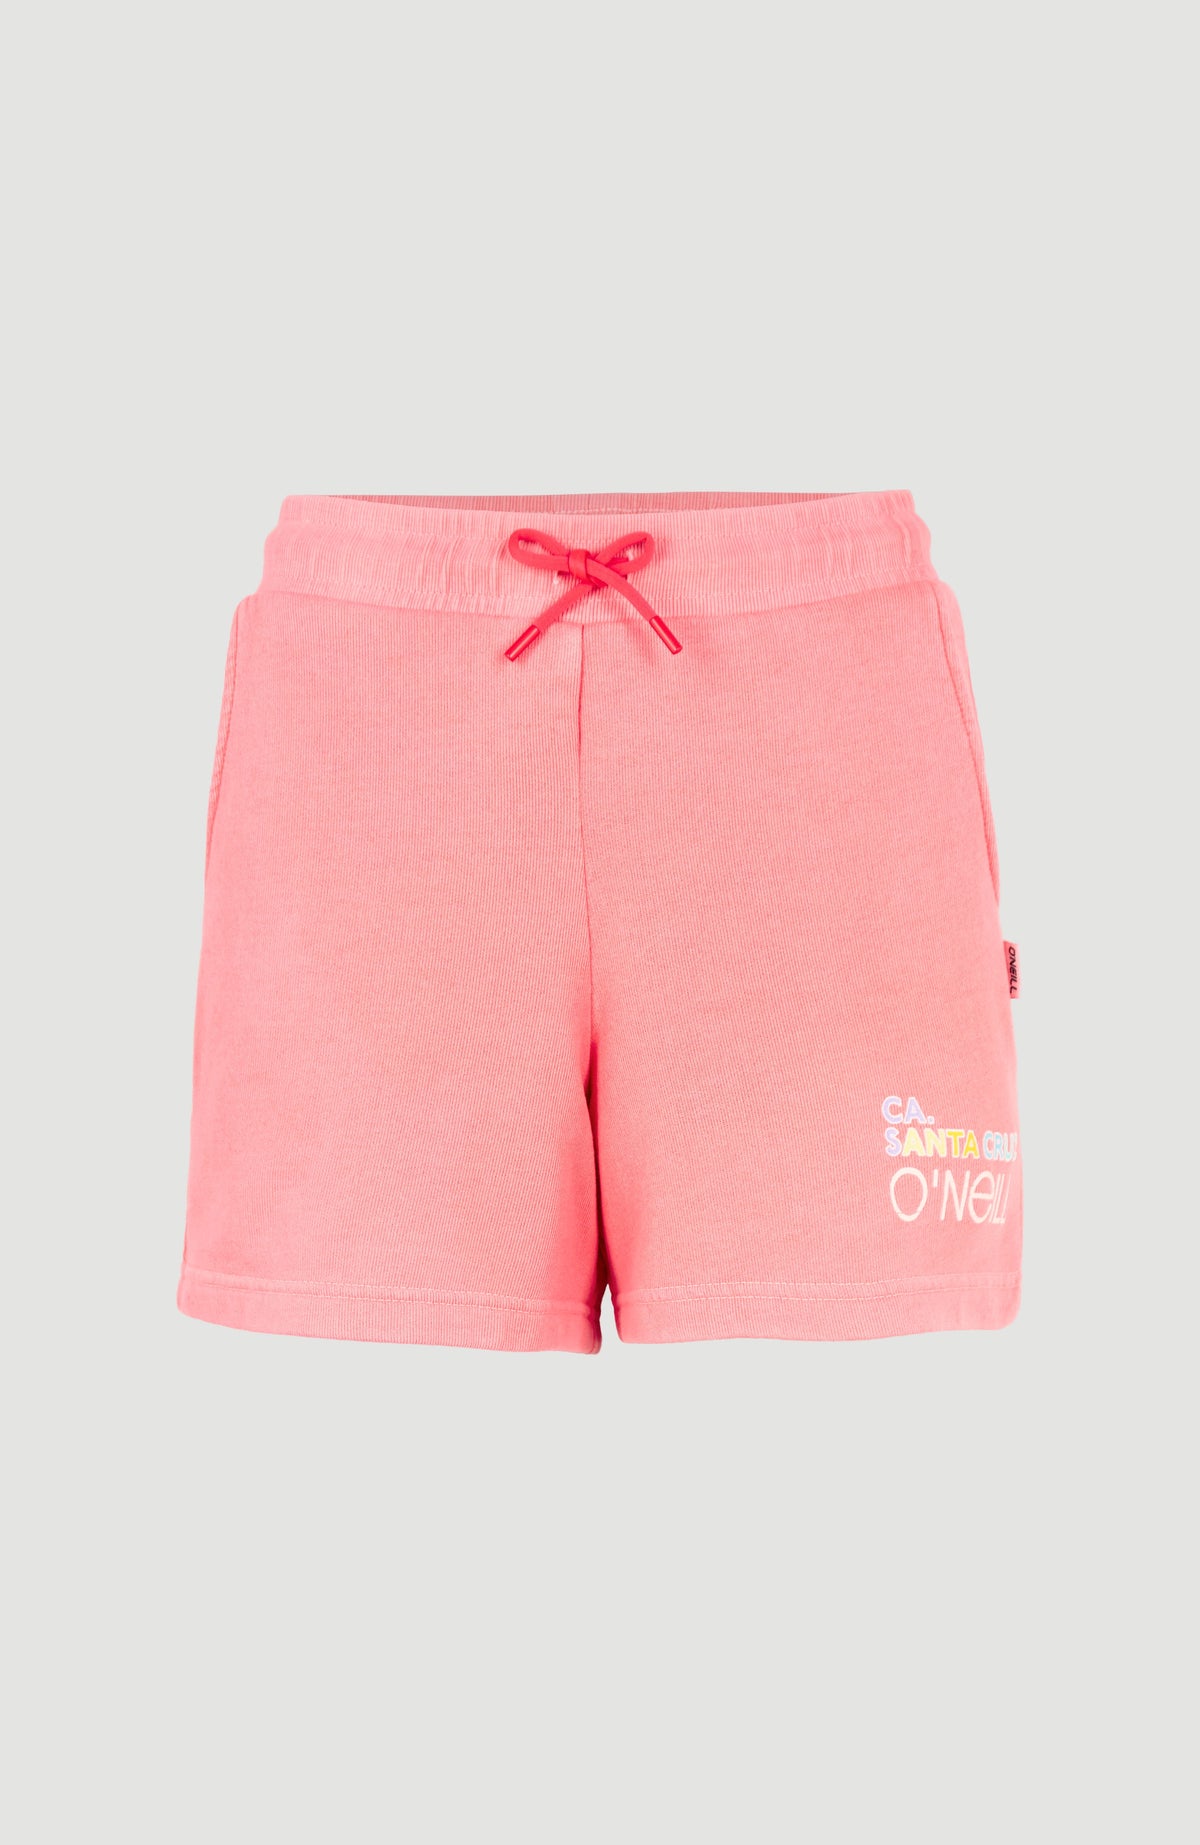 Women's Loose Quick-Drying Beach Sports Shorts (Pink Jungle) - Shop Water  Pro Sports Women's Sportswear Bottoms - Pinkoi